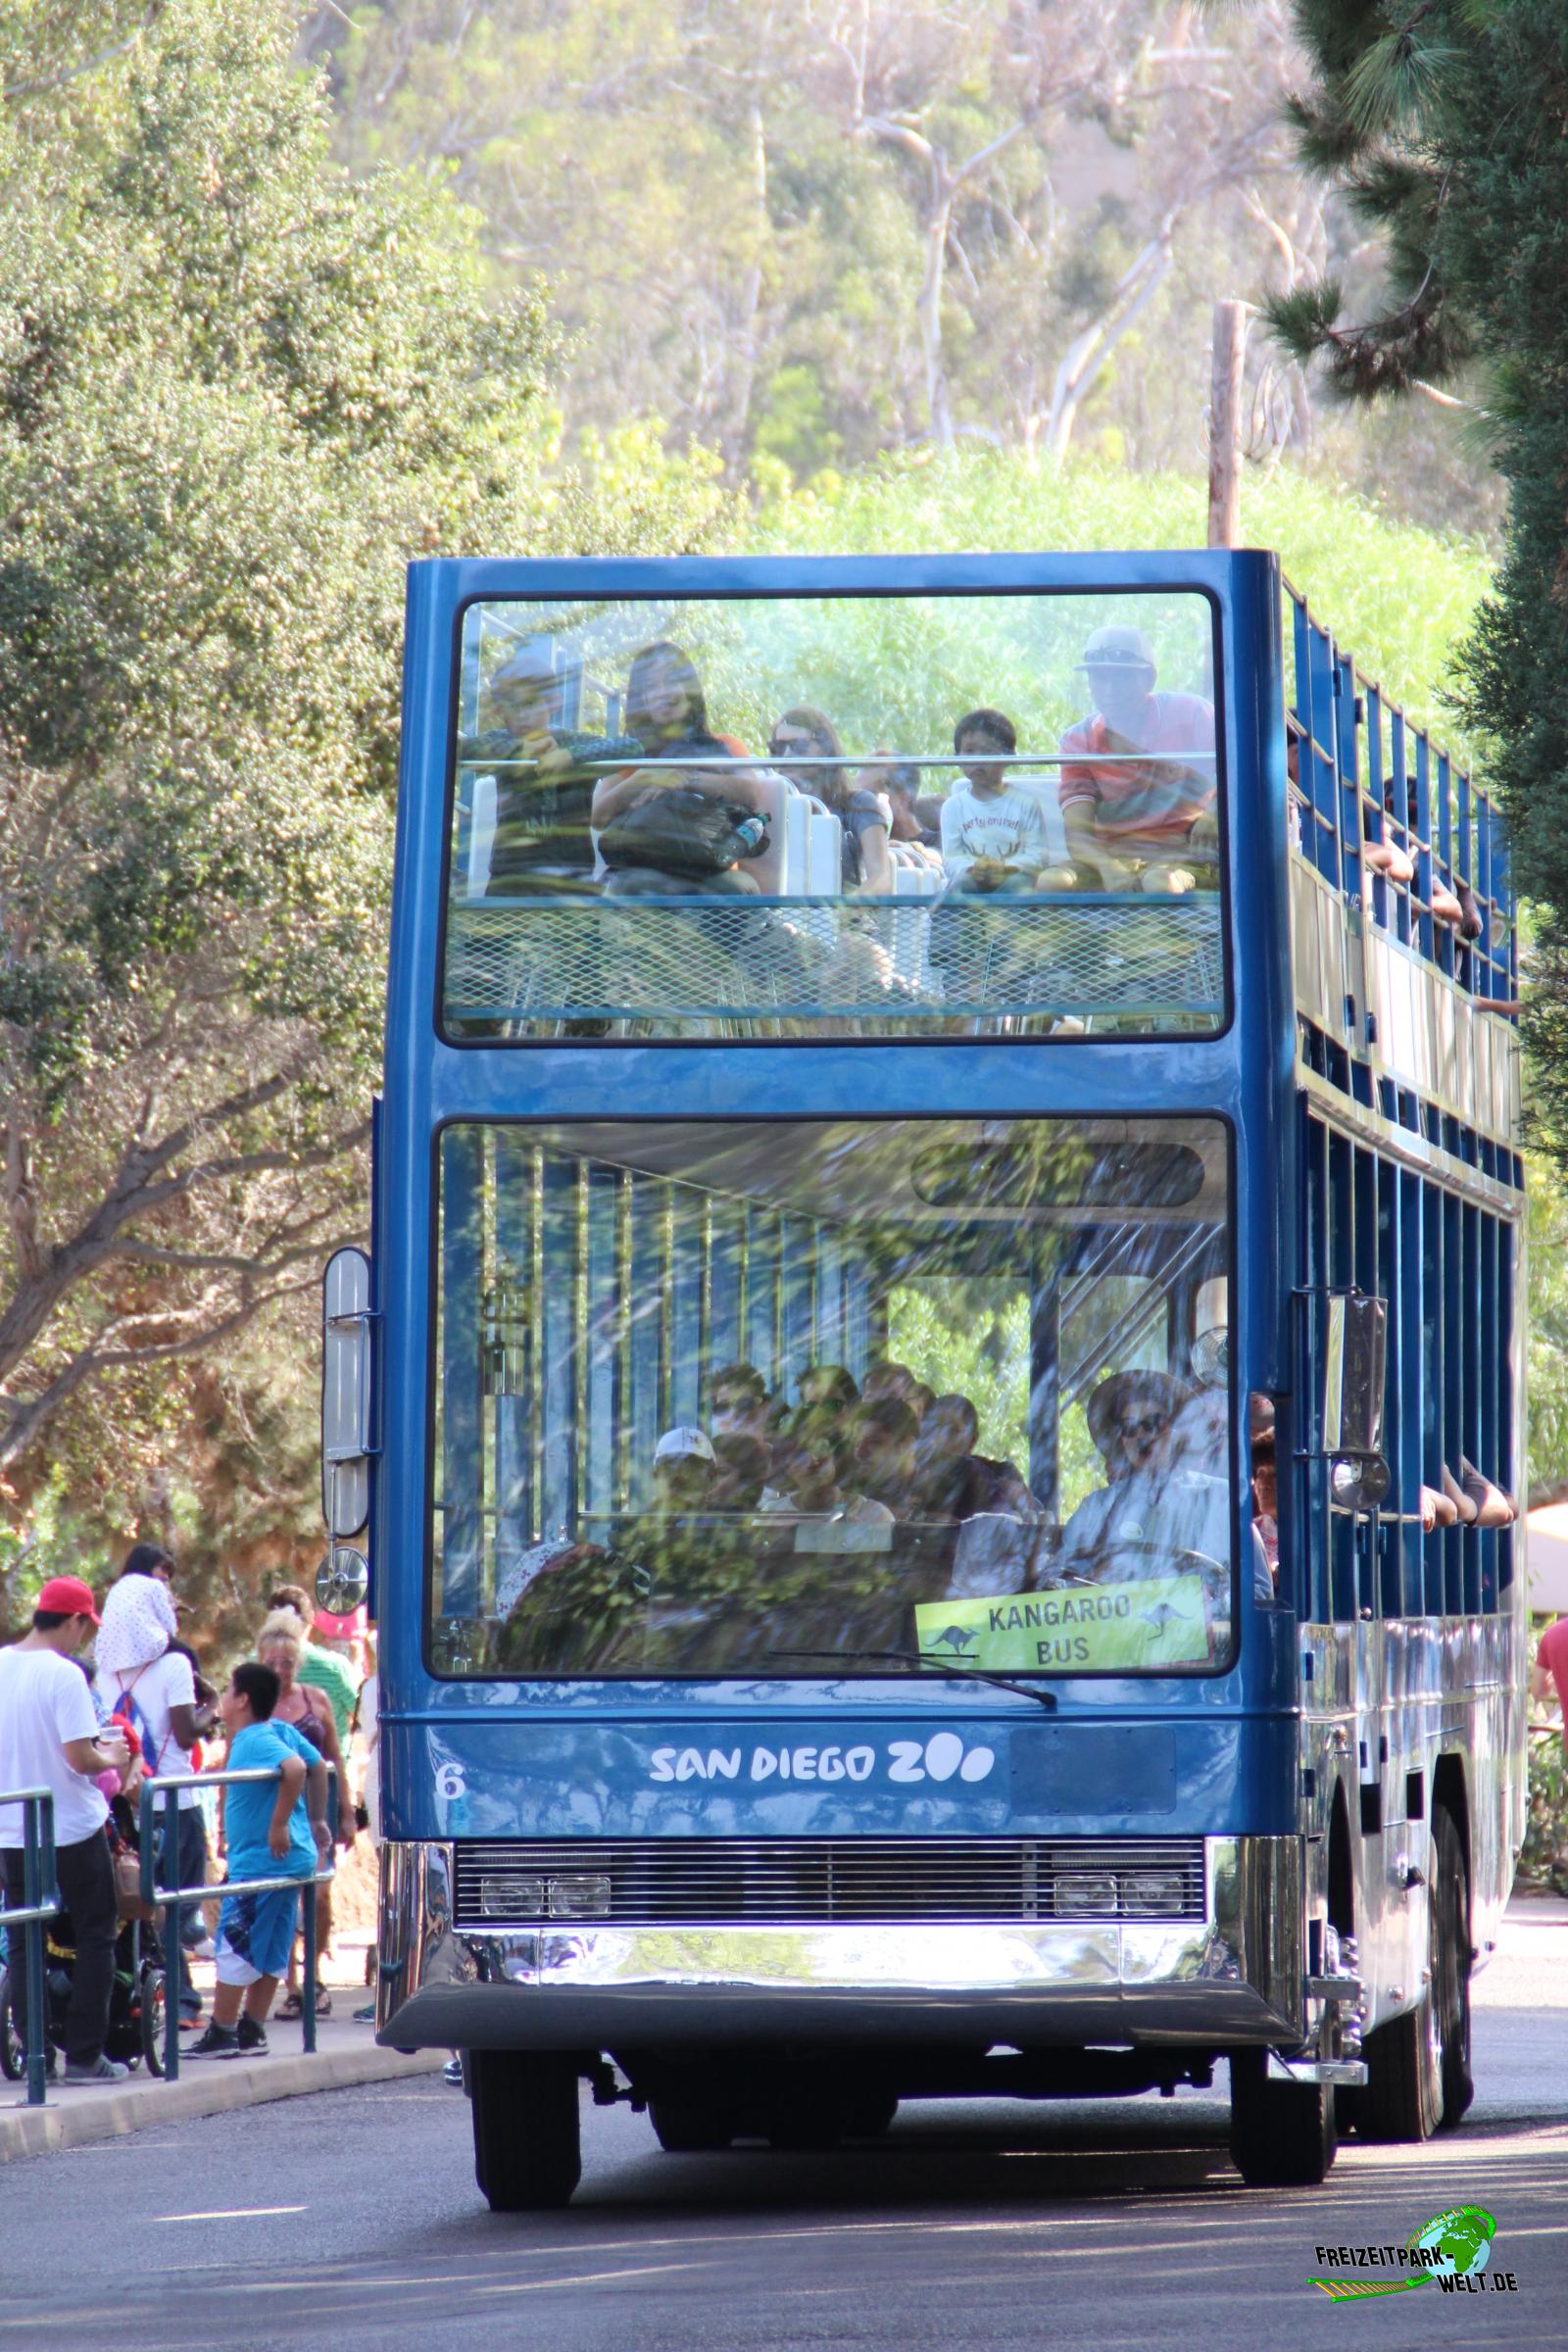 Kangaroo Bus - San Diego Zoo | Freizeitpark-Welt.de